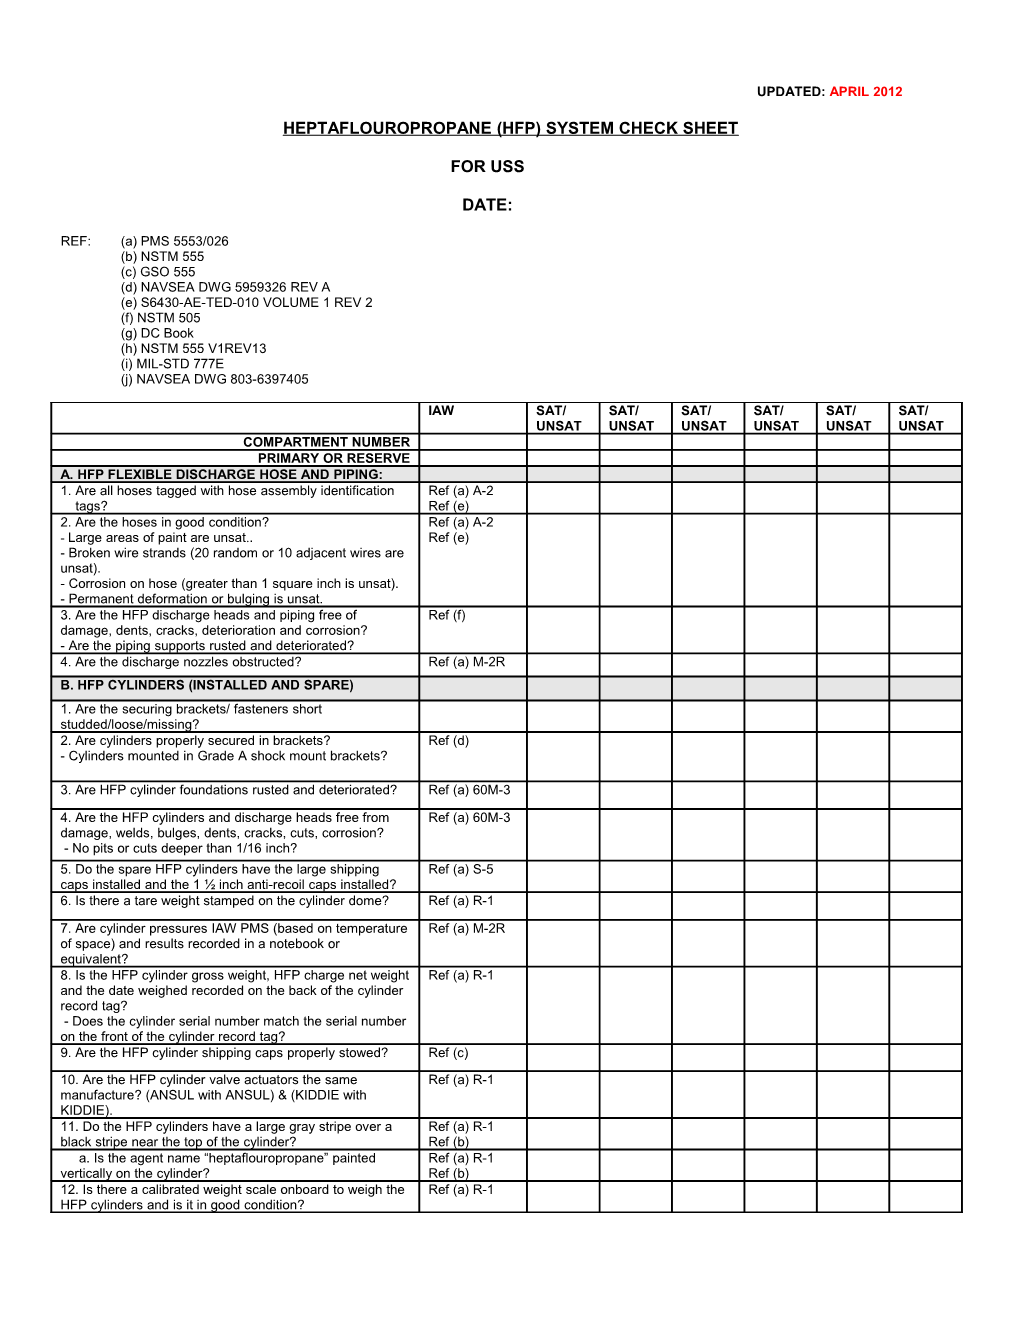 Heptaflouropropane (Hfp) System Check Sheet (Cont D)